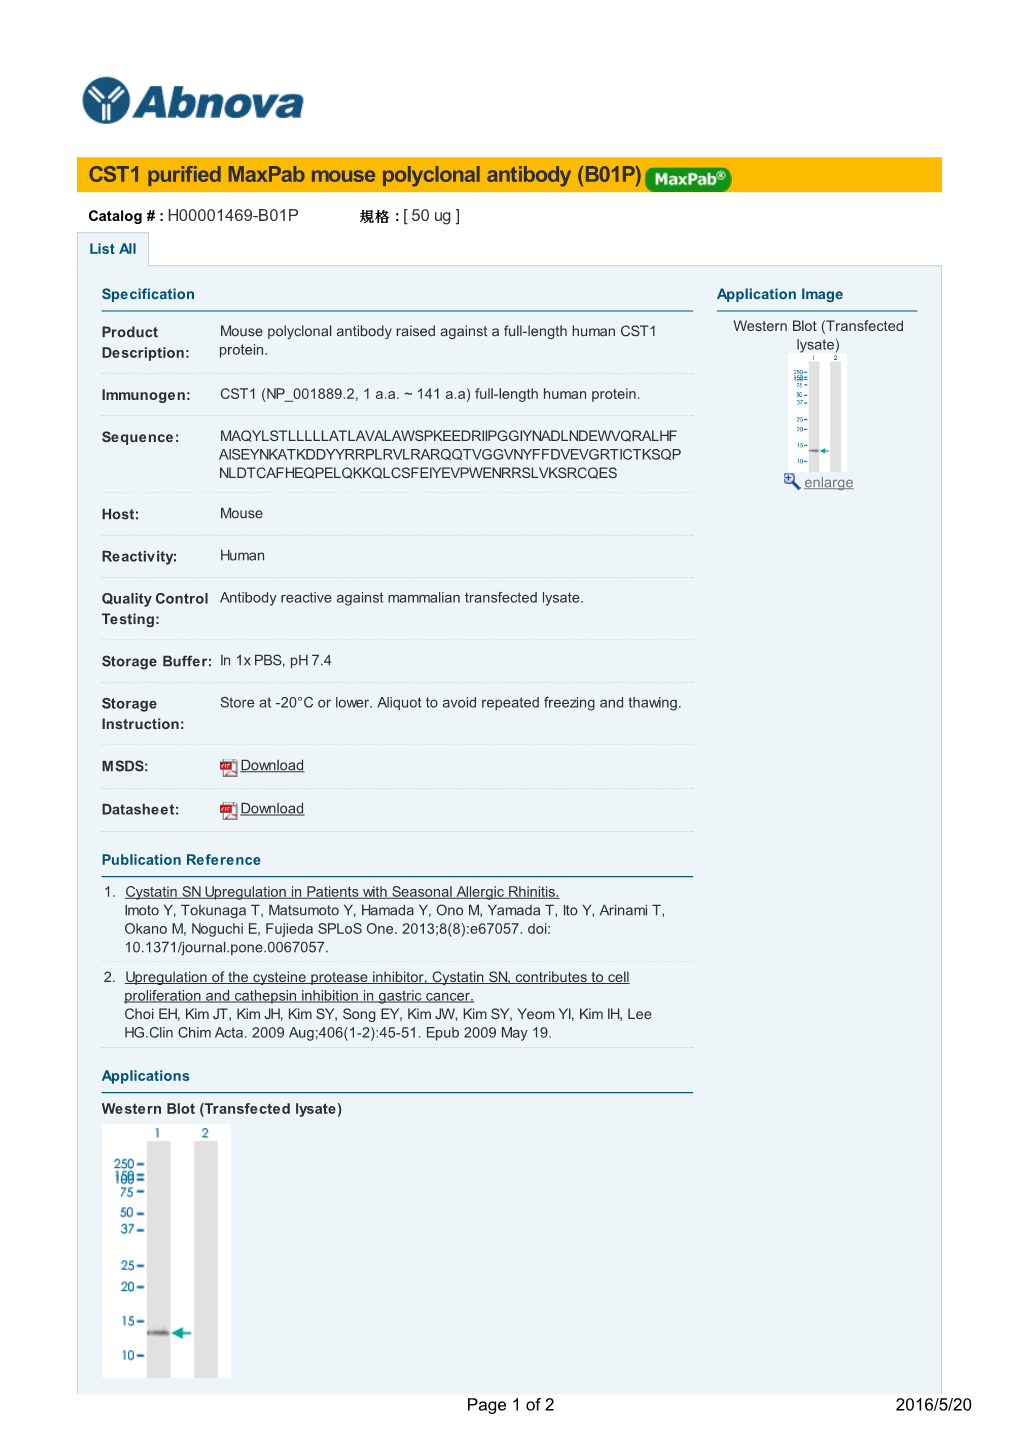 CST1 Purified Maxpab Mouse Polyclonal Antibody (B01P)